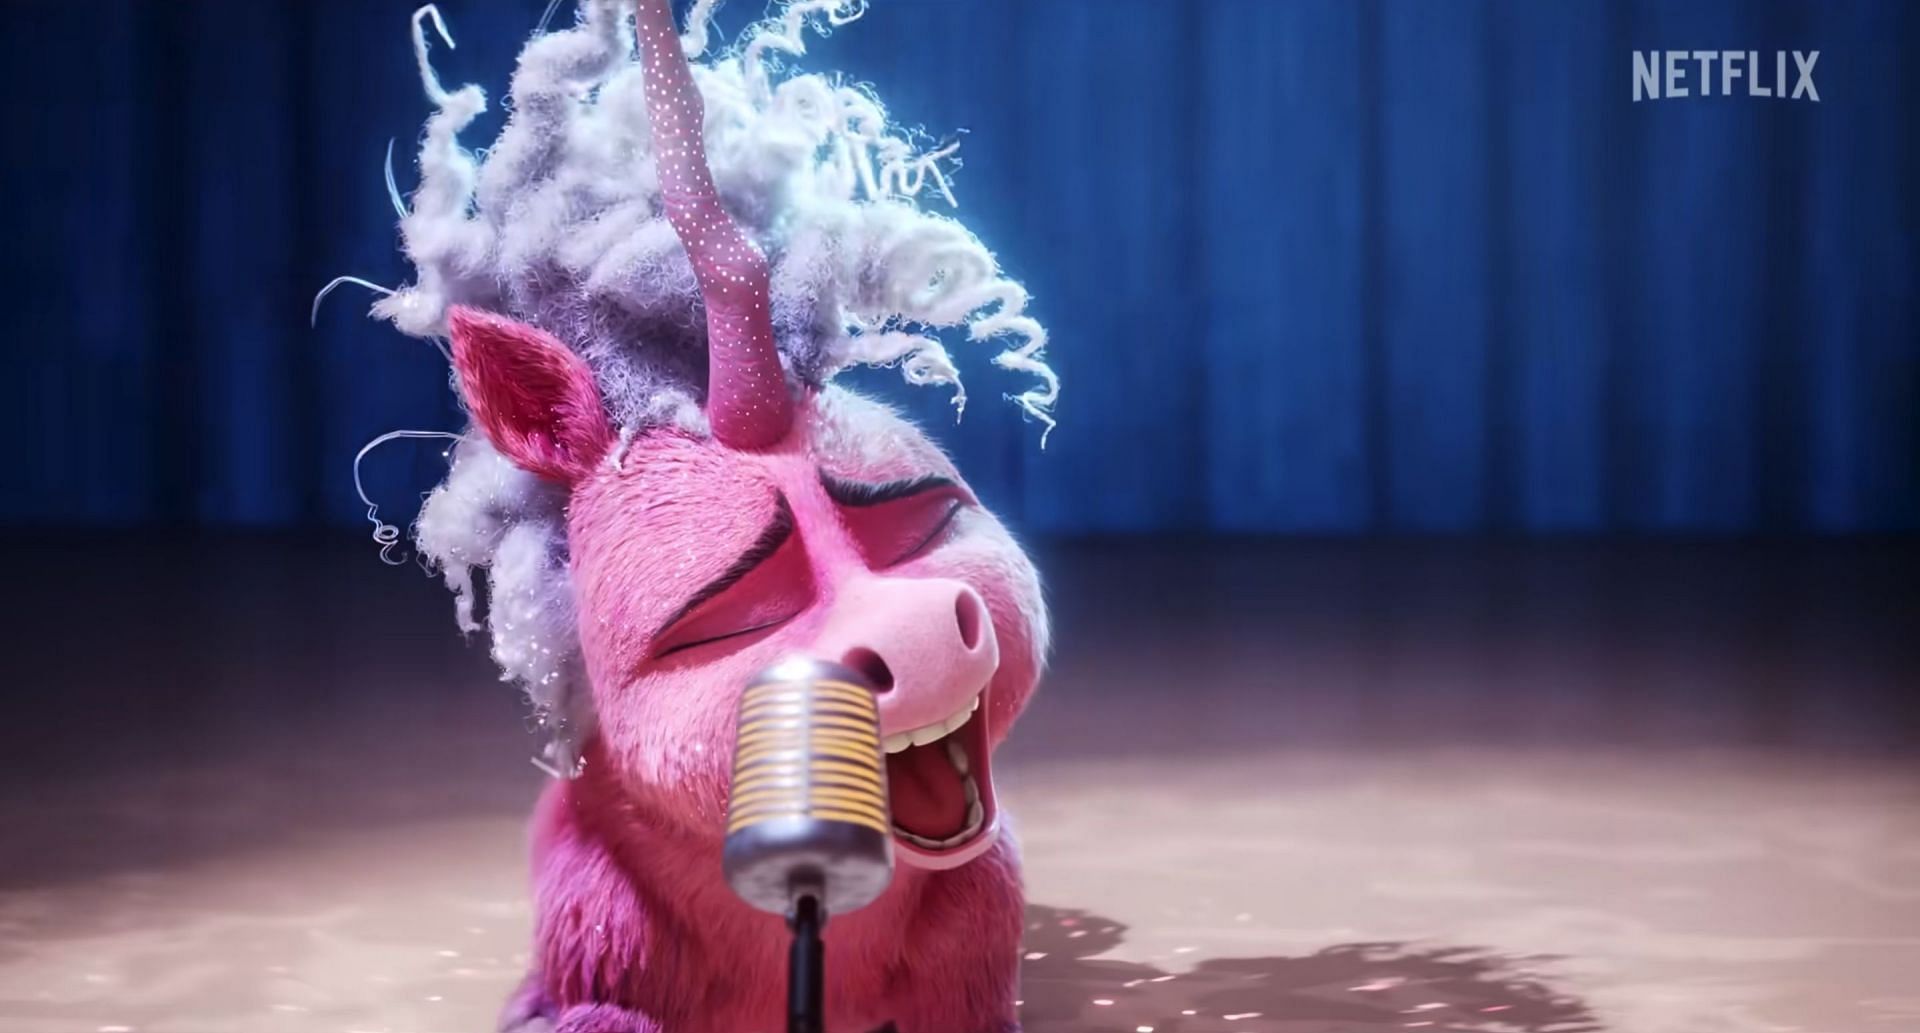 7 best movies like Netflix's Thelma the Unicorn